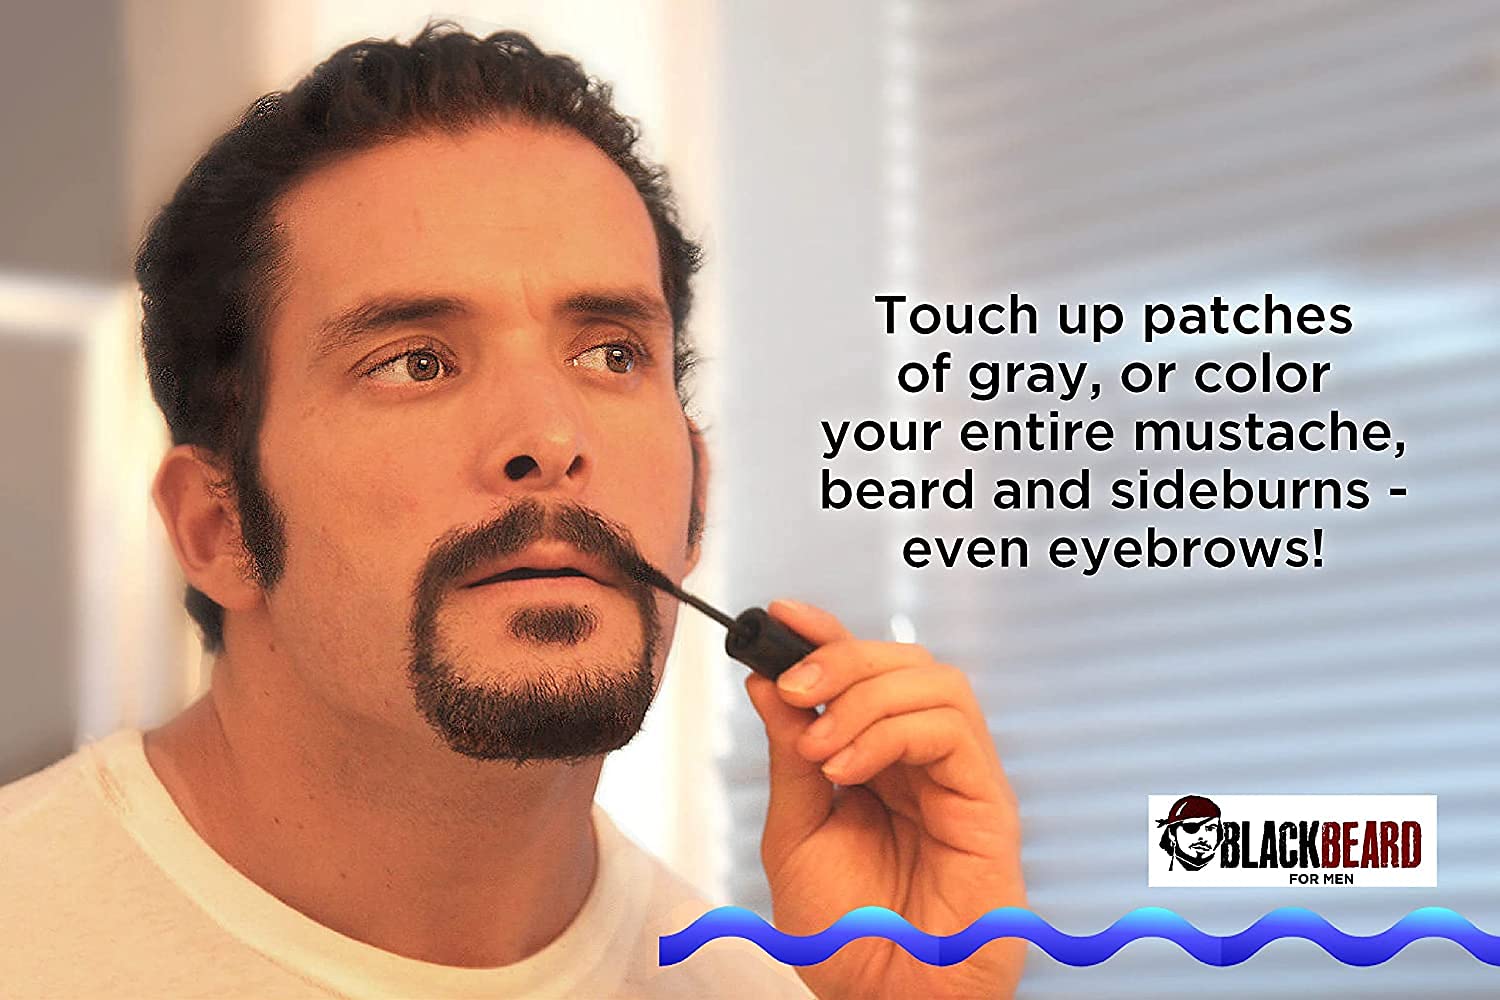 Blackbeard For Men Formula X Instant Mustache, Eyebrow and Sideburns Color, Fast, Easy, Mens Grooming, Beard Dye Alternative, Black, 1 Pack - image 3 of 9